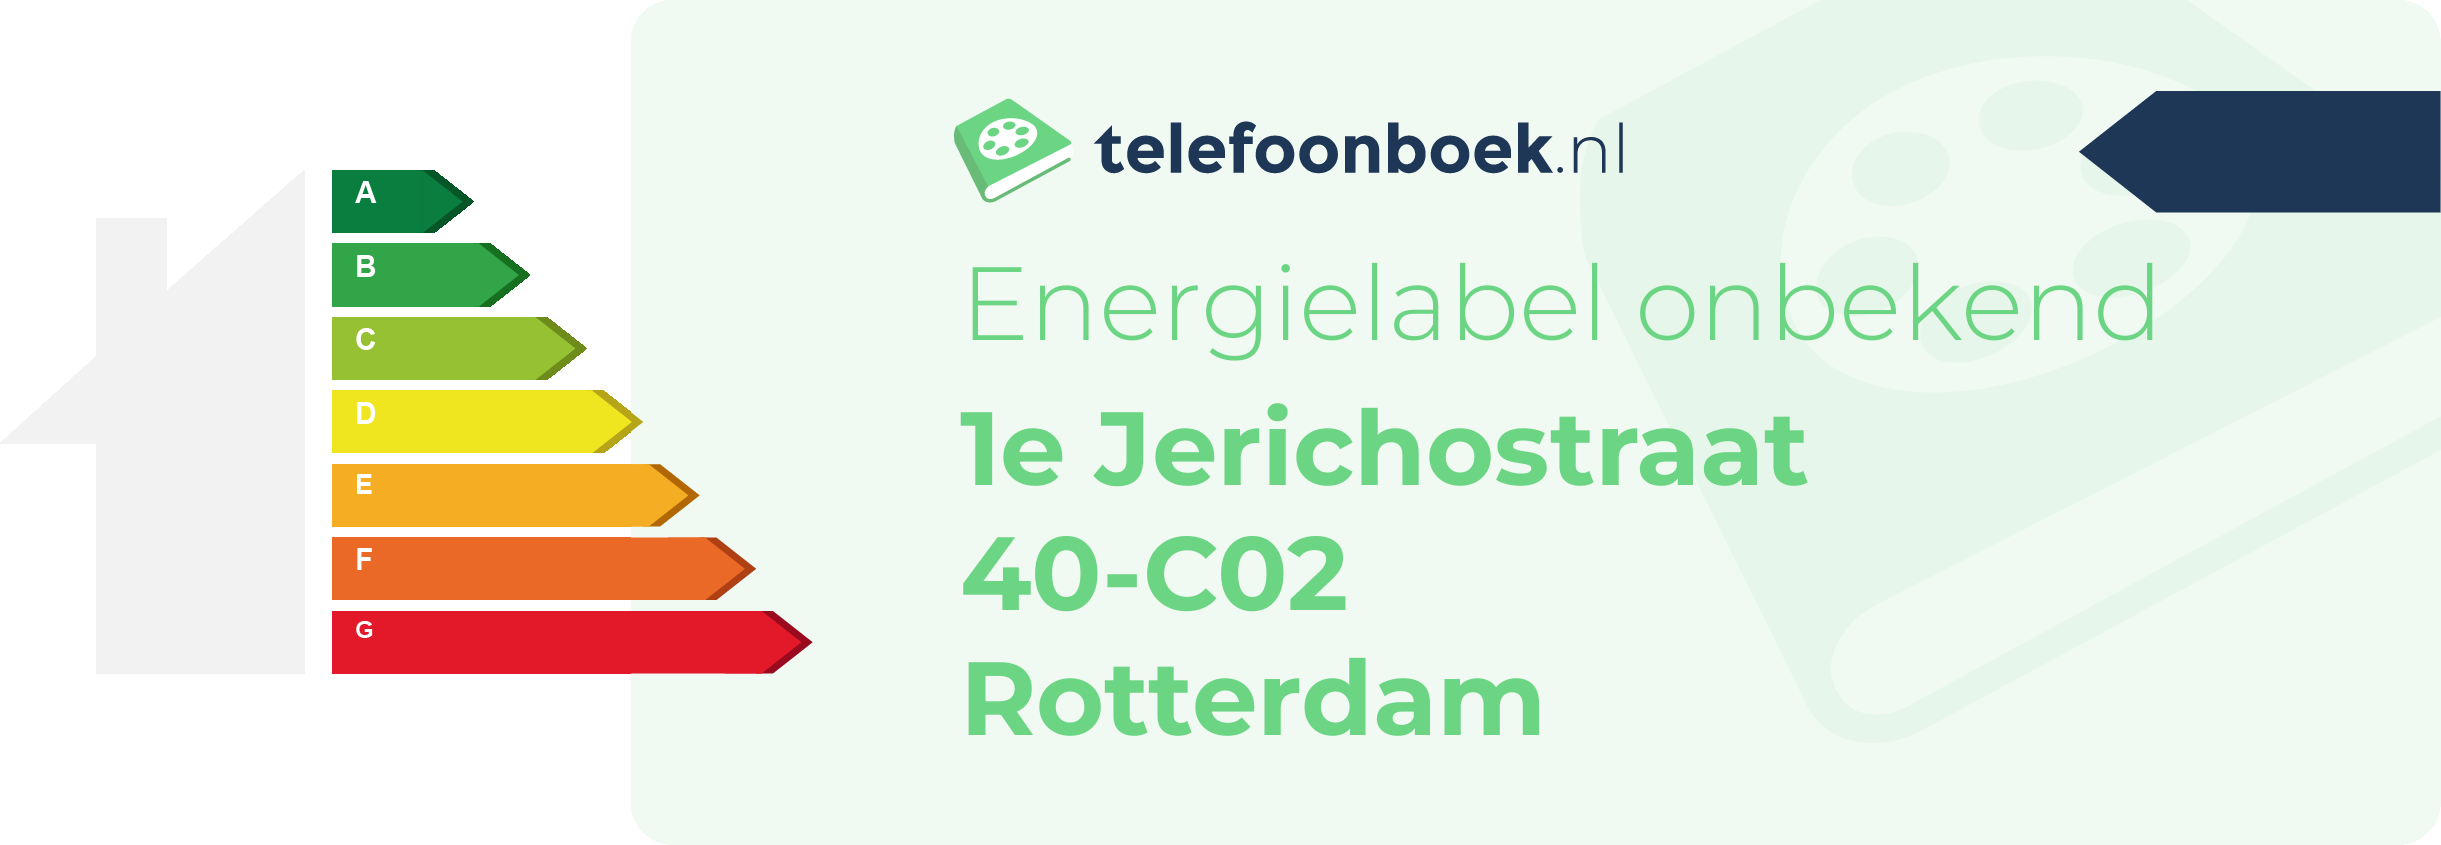 Energielabel 1e Jerichostraat 40-C02 Rotterdam